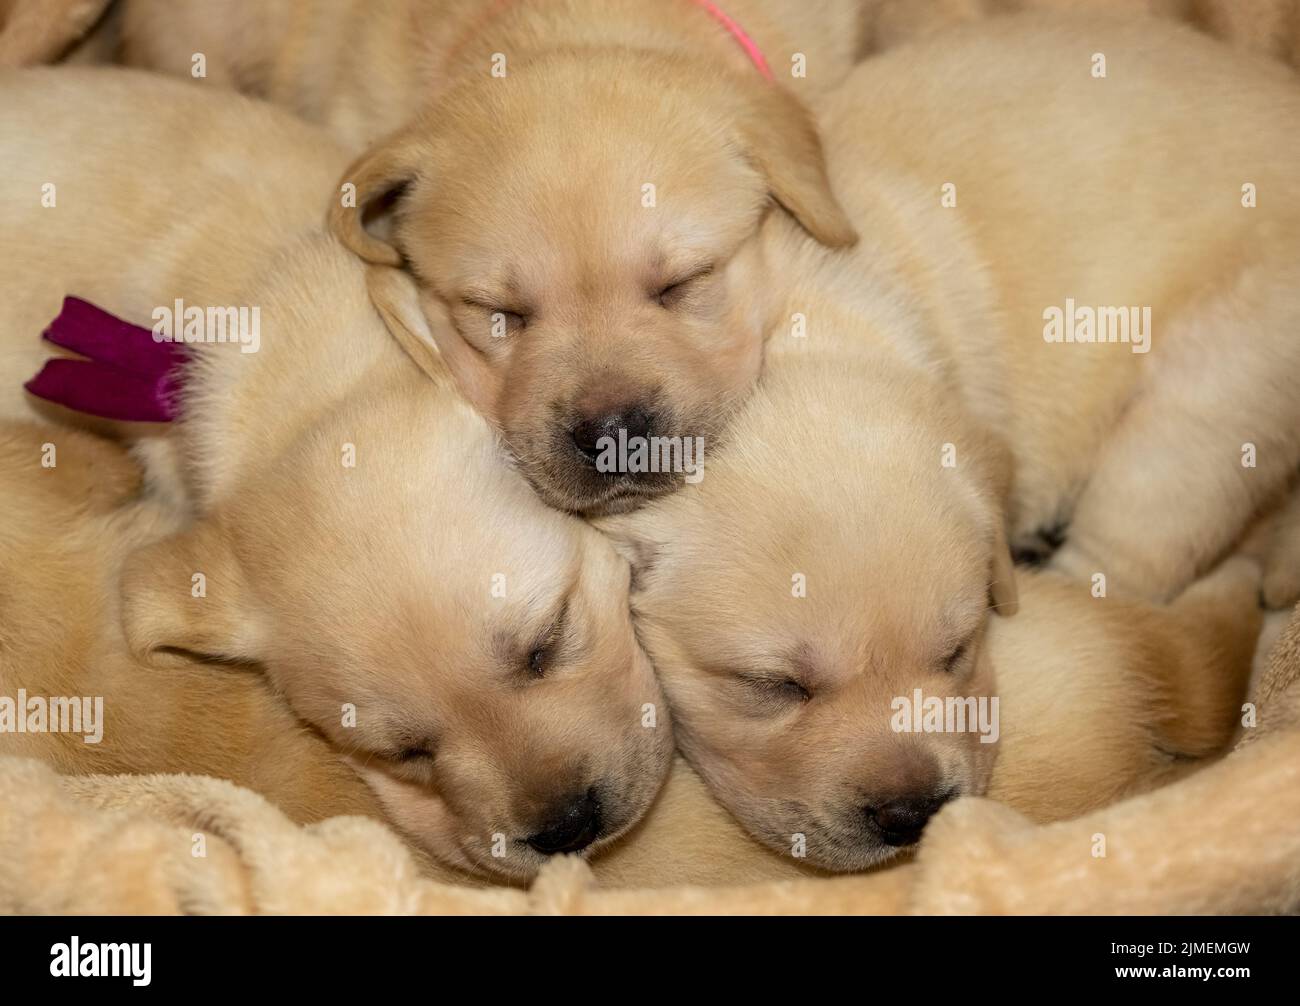 Labrador puppies dog sleeping Stock Photo